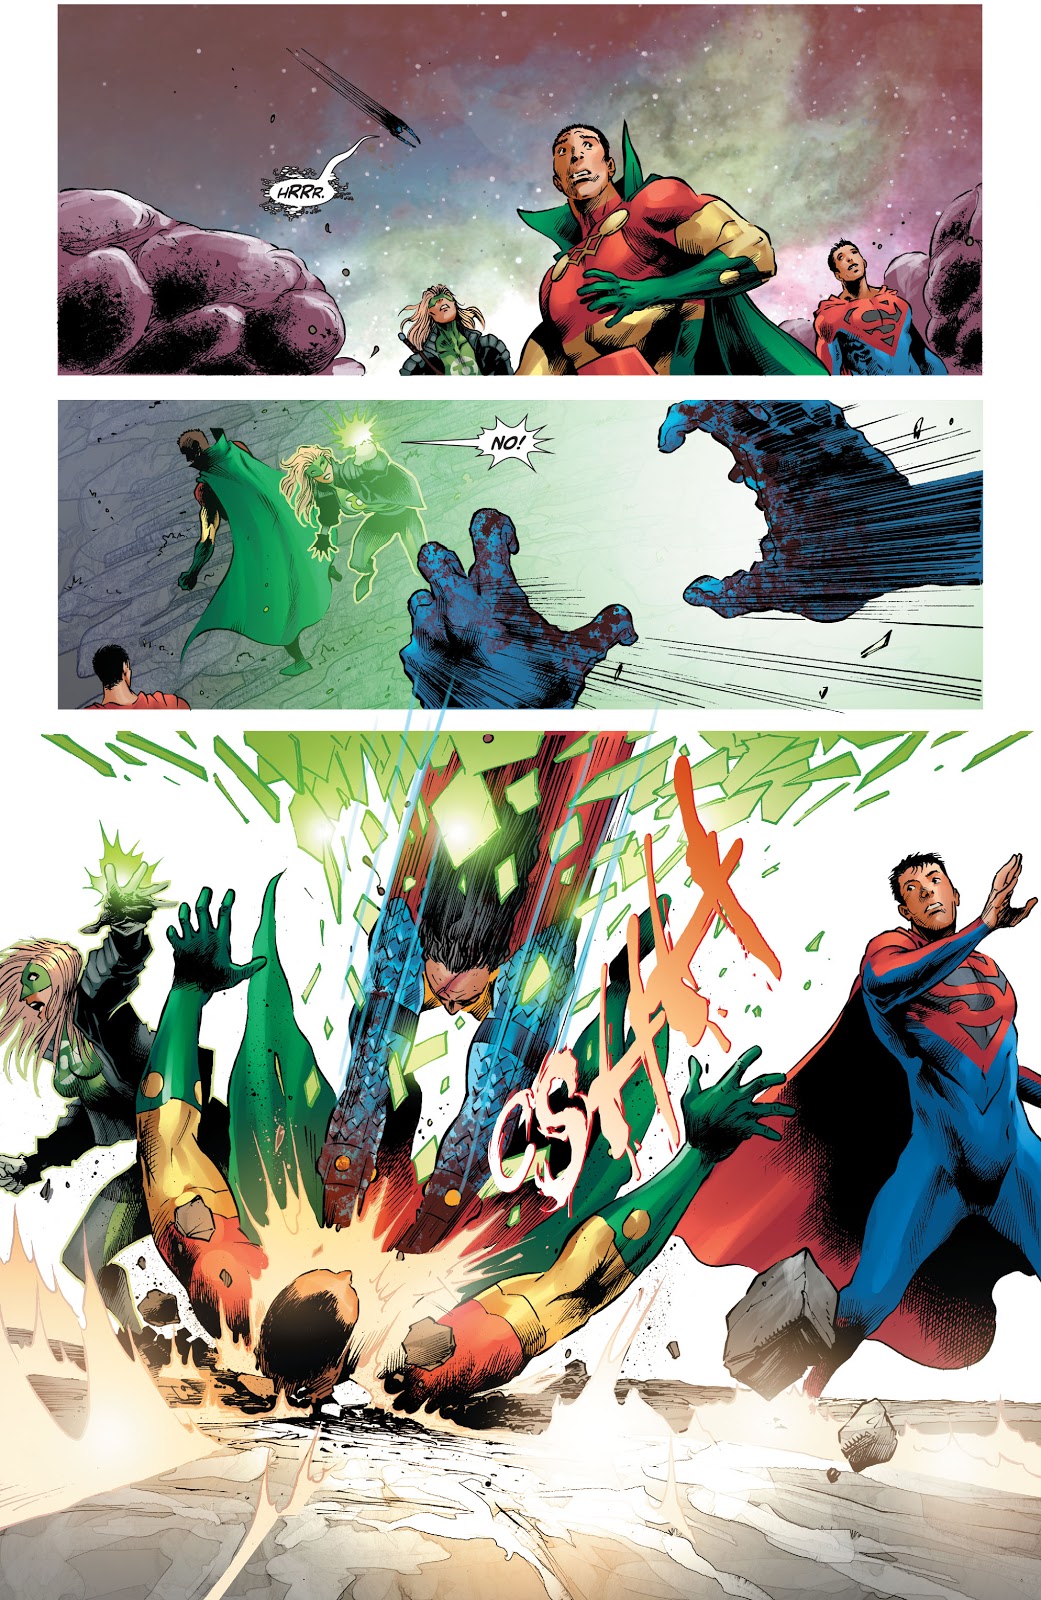 Superman Cures Big Barda Of The Anti-Life Virus (DCeased)